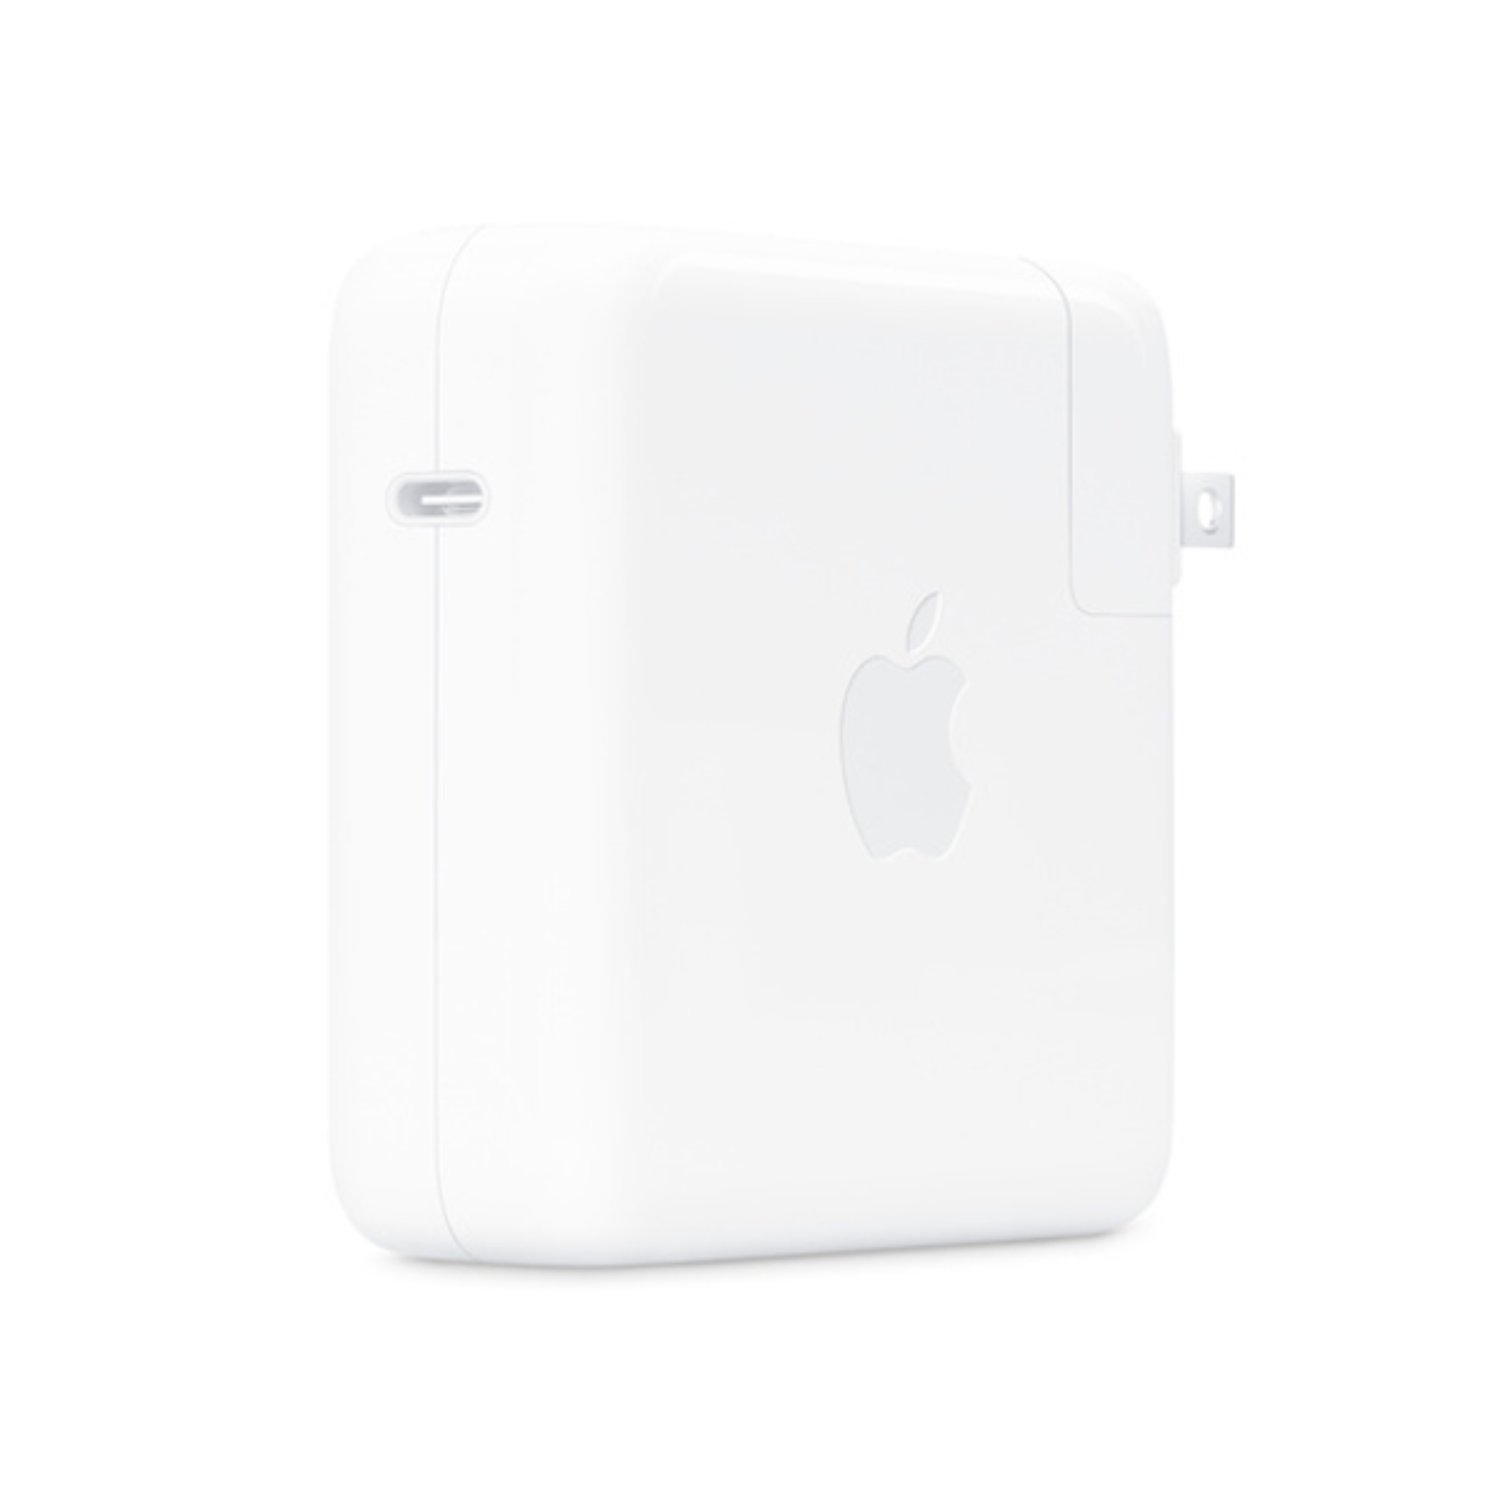 شارژر 29 وات اپل مدل  Apple Usb-C 29W Power Adapter (MJ262)